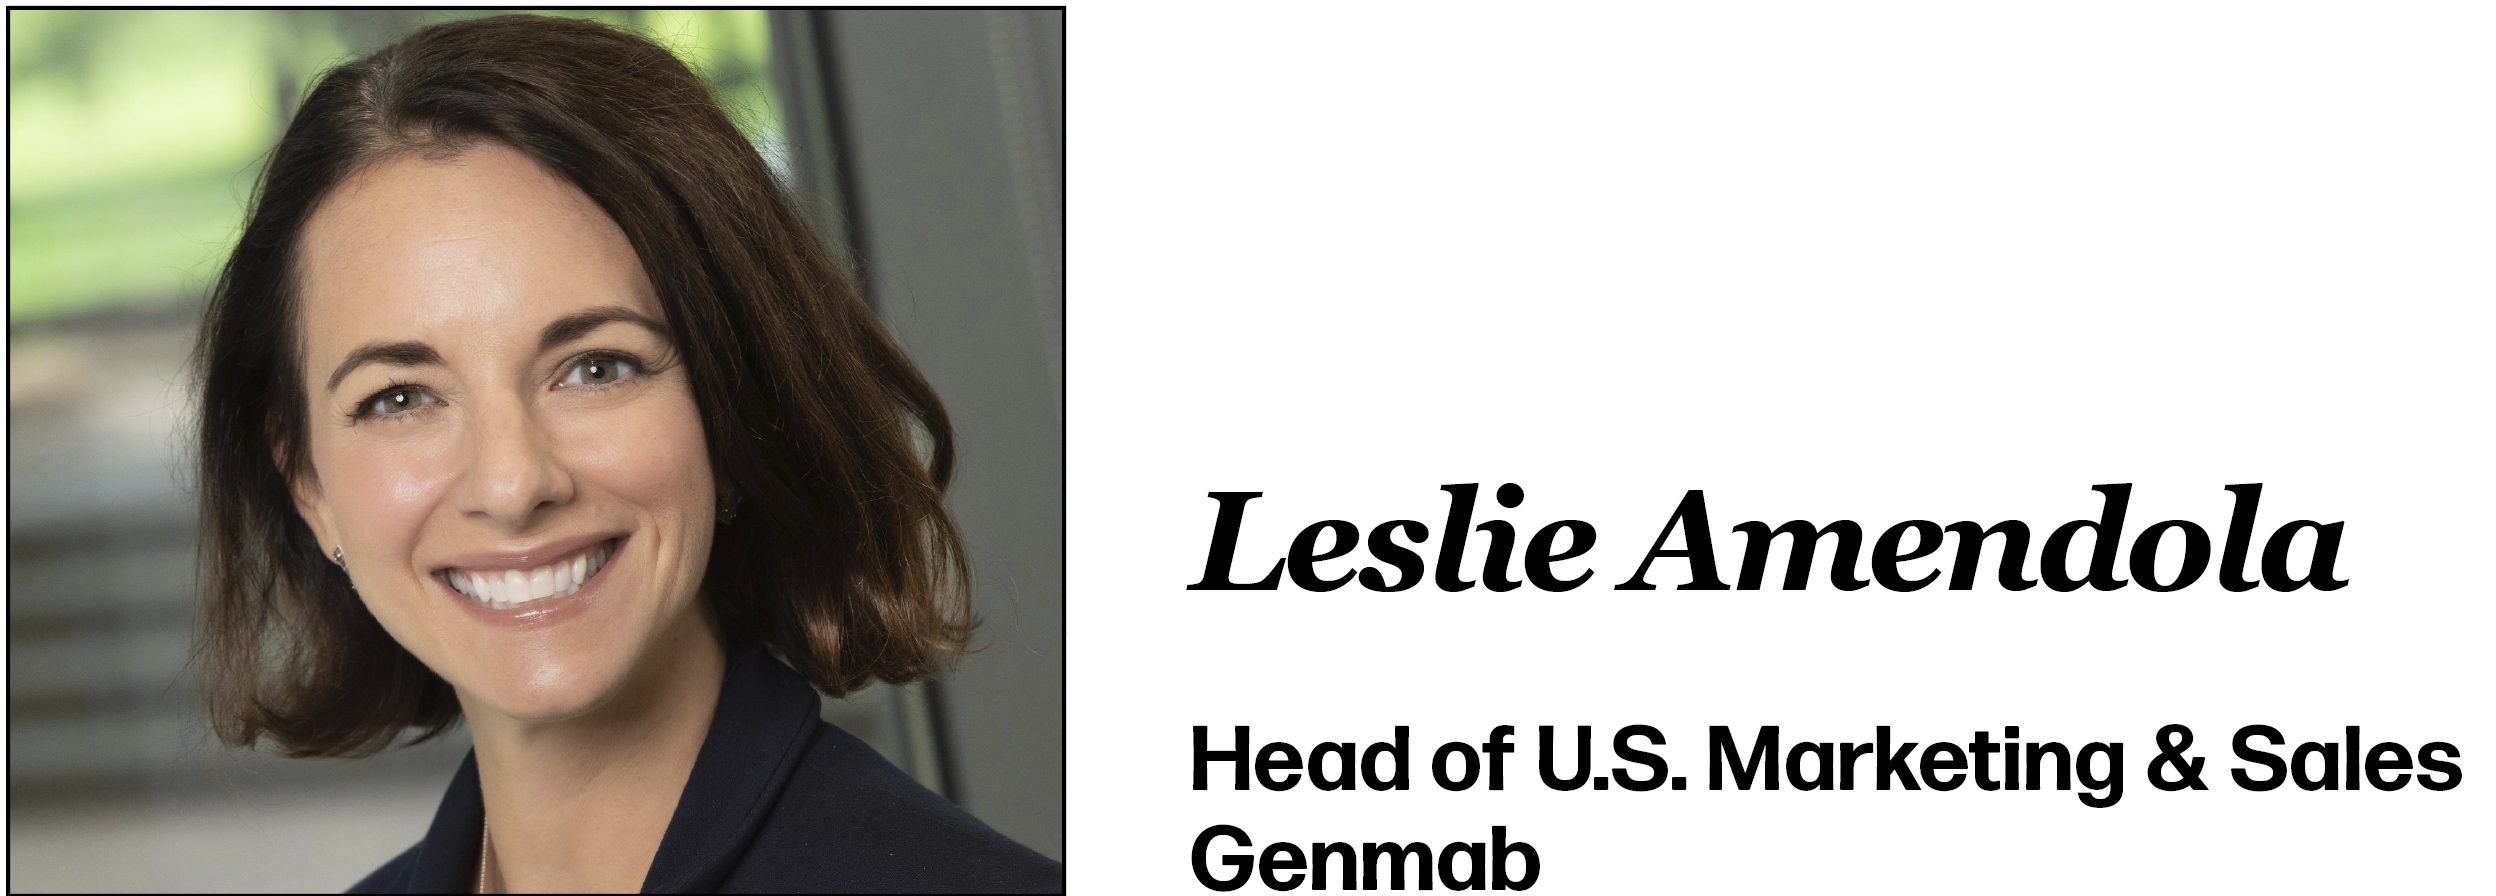 Leslie Amendola Head of U.S. Marketing & Sales Genmab